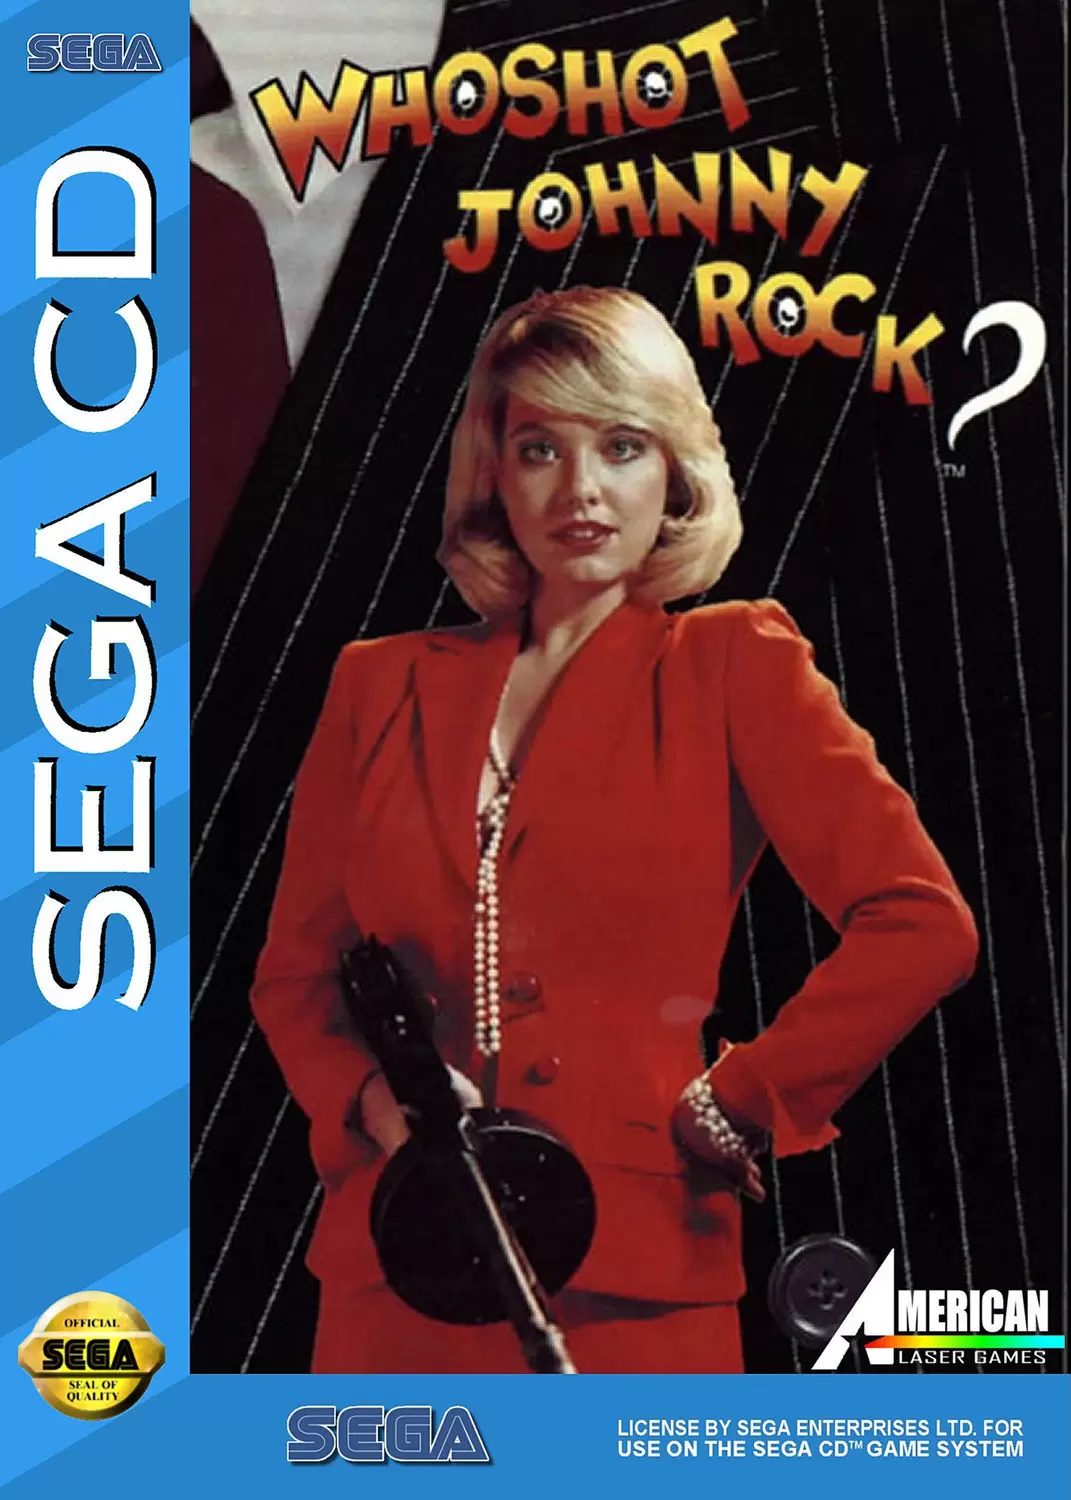 SEGA Mega CD Games - Who Shot Johnny Rock?